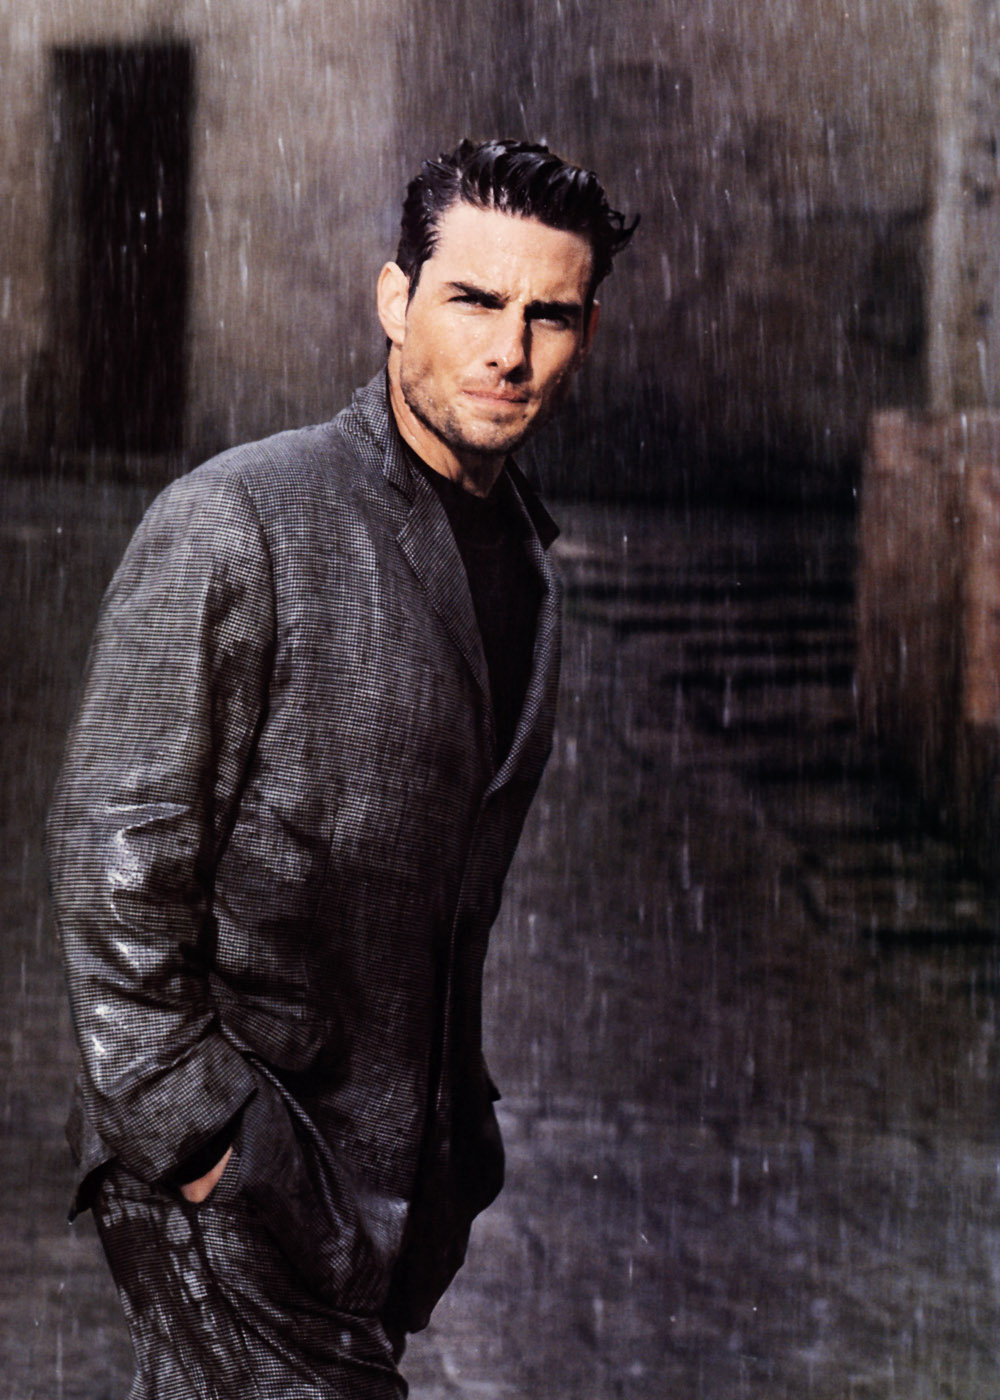 Tom Cruise photo 37 of 422 pics, wallpaper - photo #29769 - ThePlace2